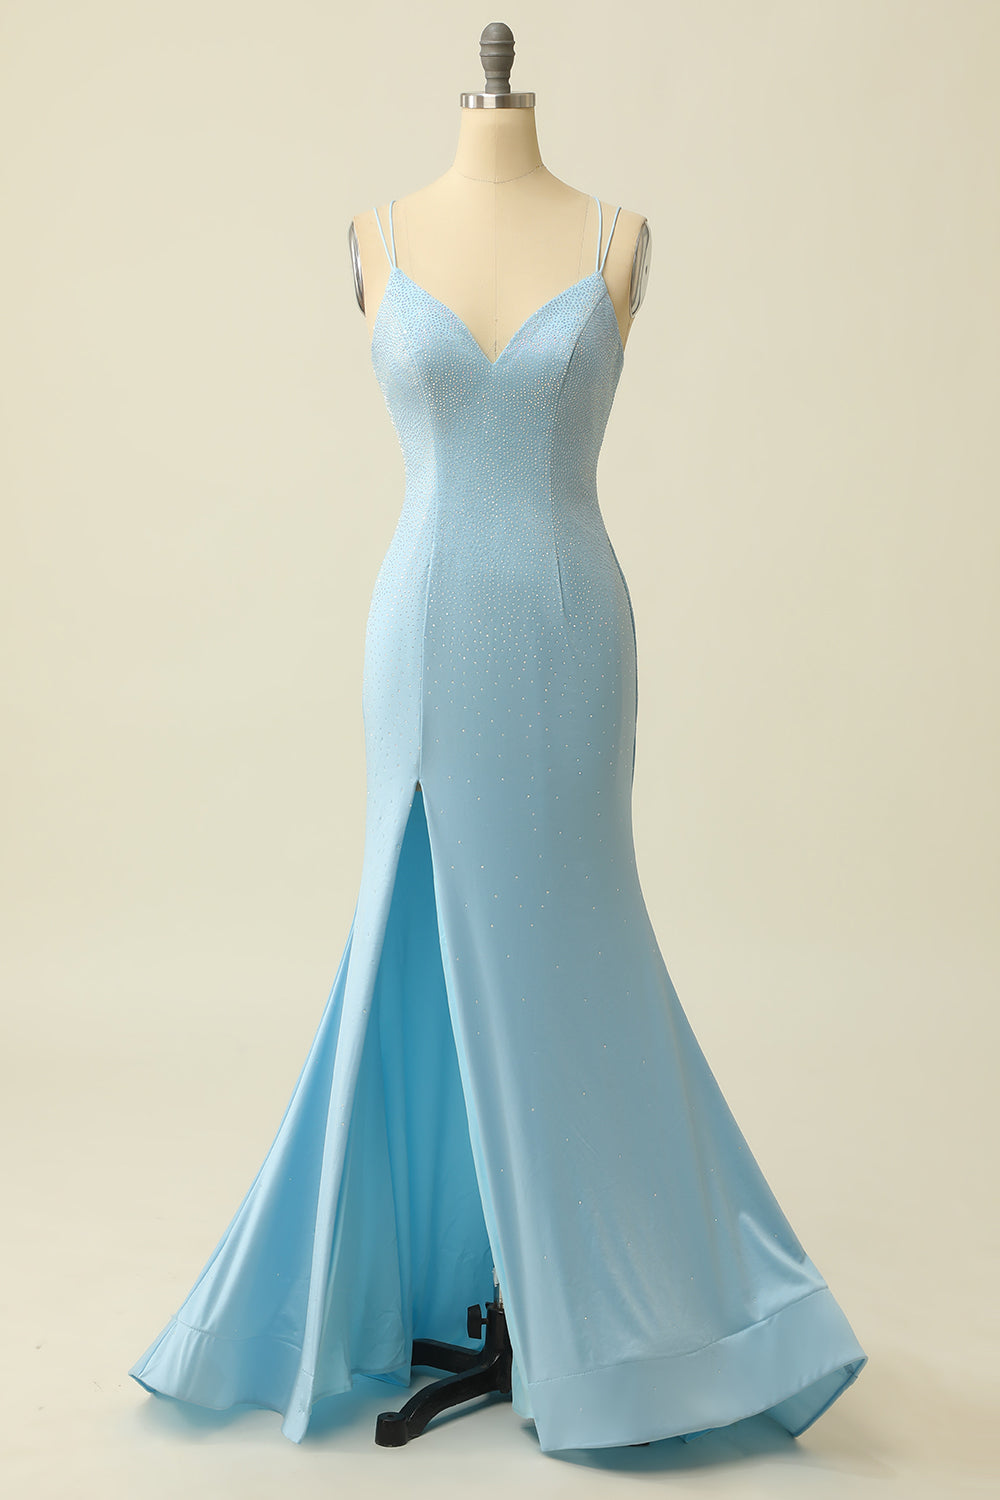 Prom Dress Floral, Light Blue Mermaid Spaghetti Straps Prom Dress